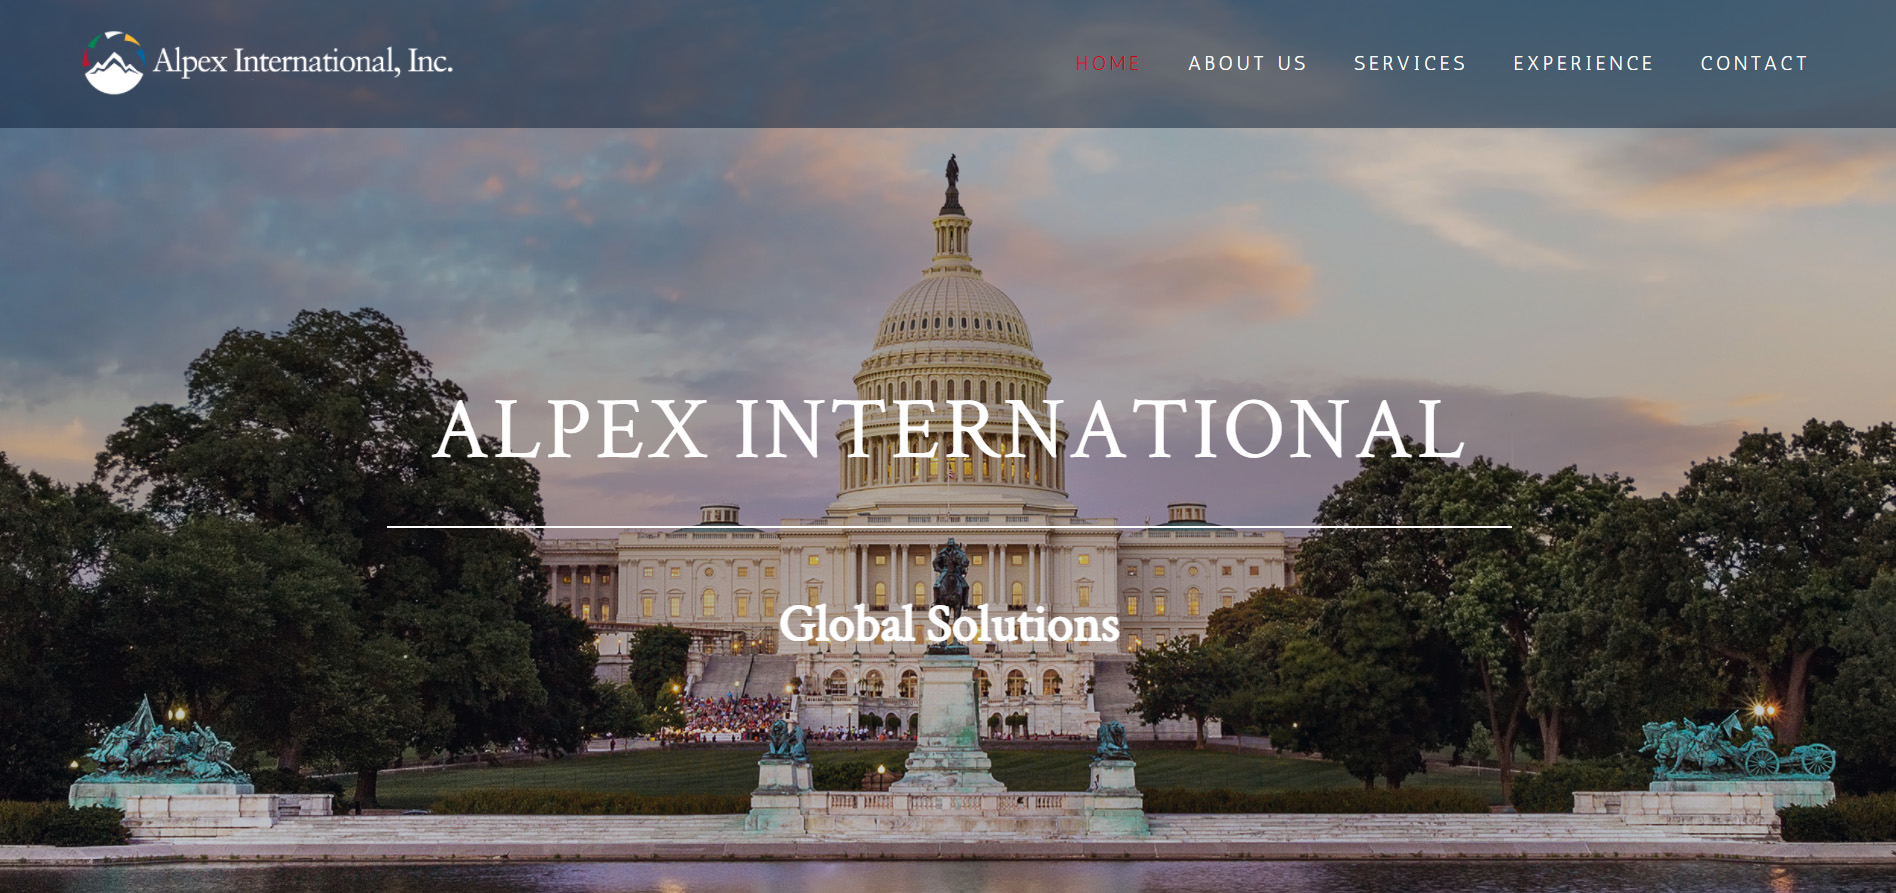 Alpex International